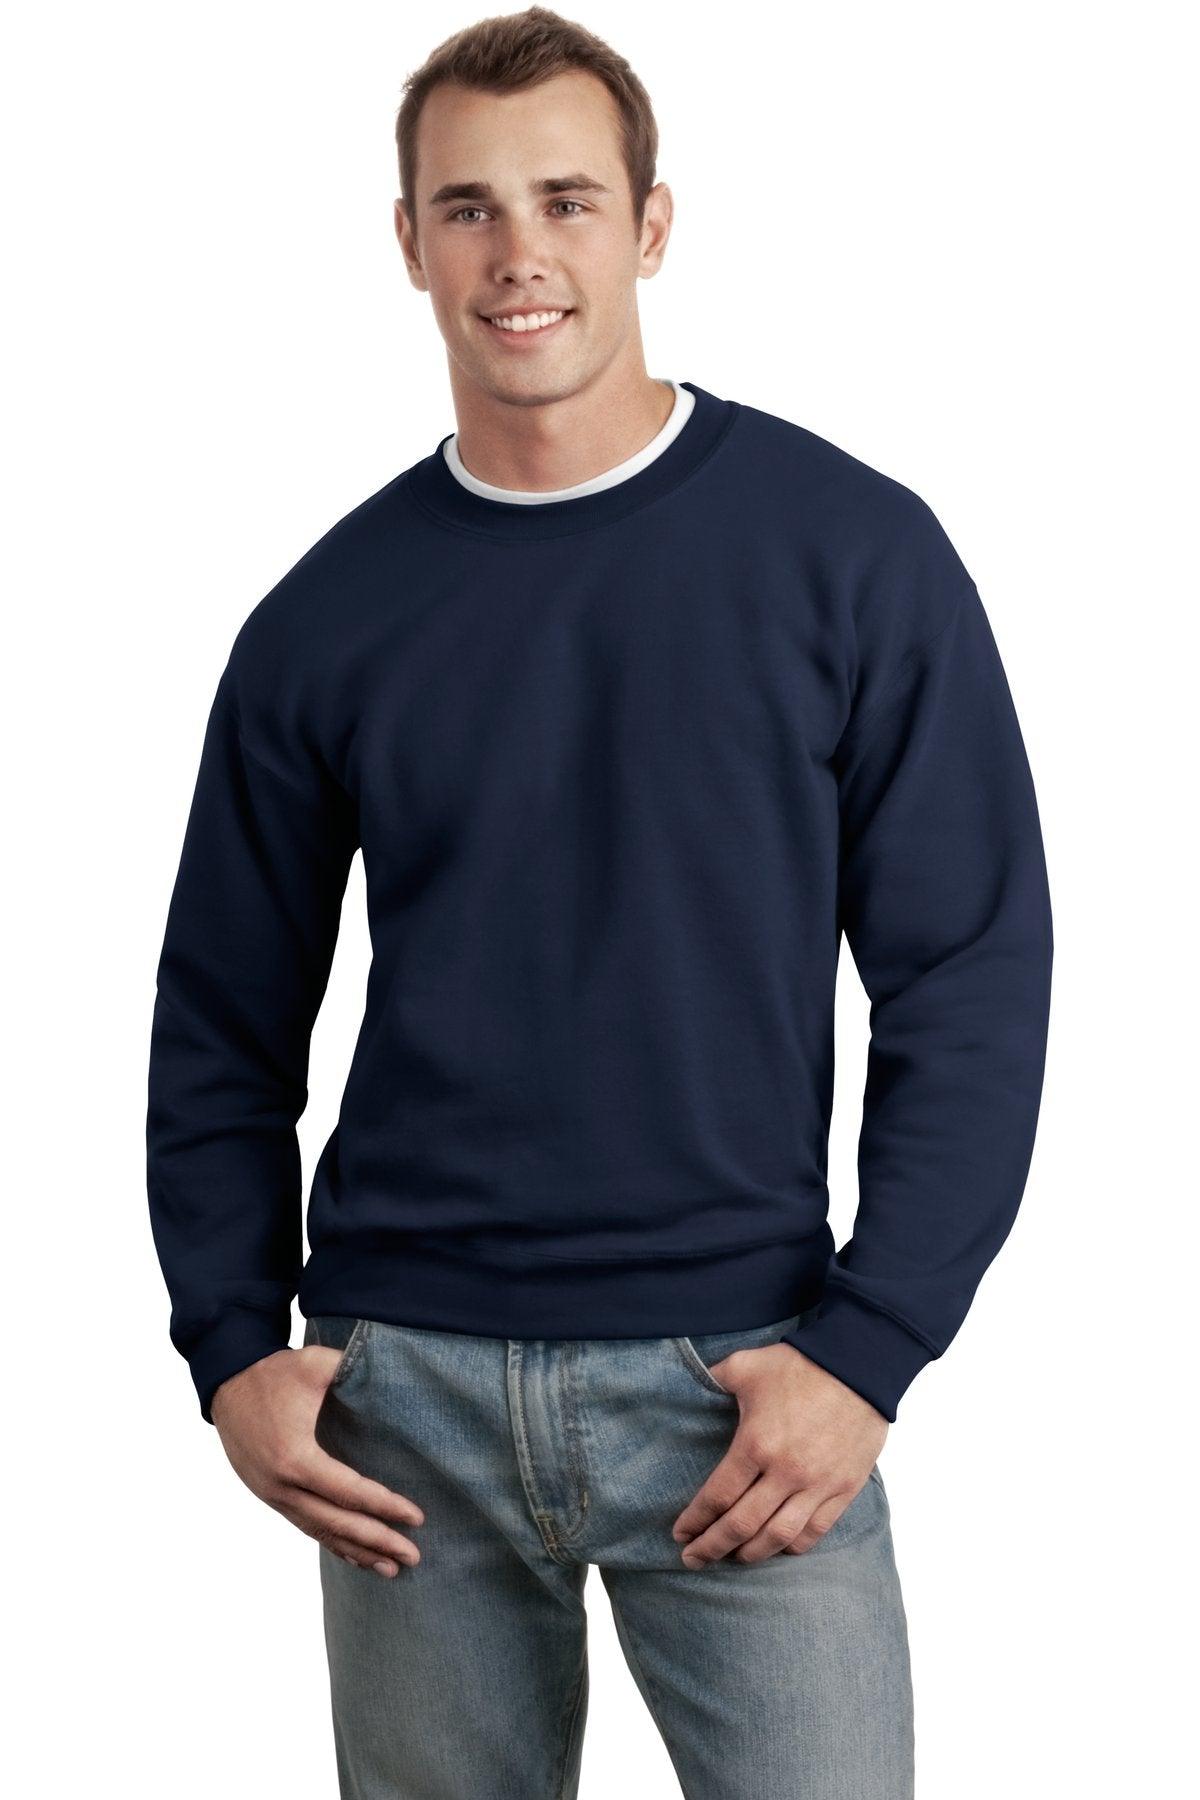 Gildan - DryBlend Crewneck Sweatshirt. 12000 - Dresses Max